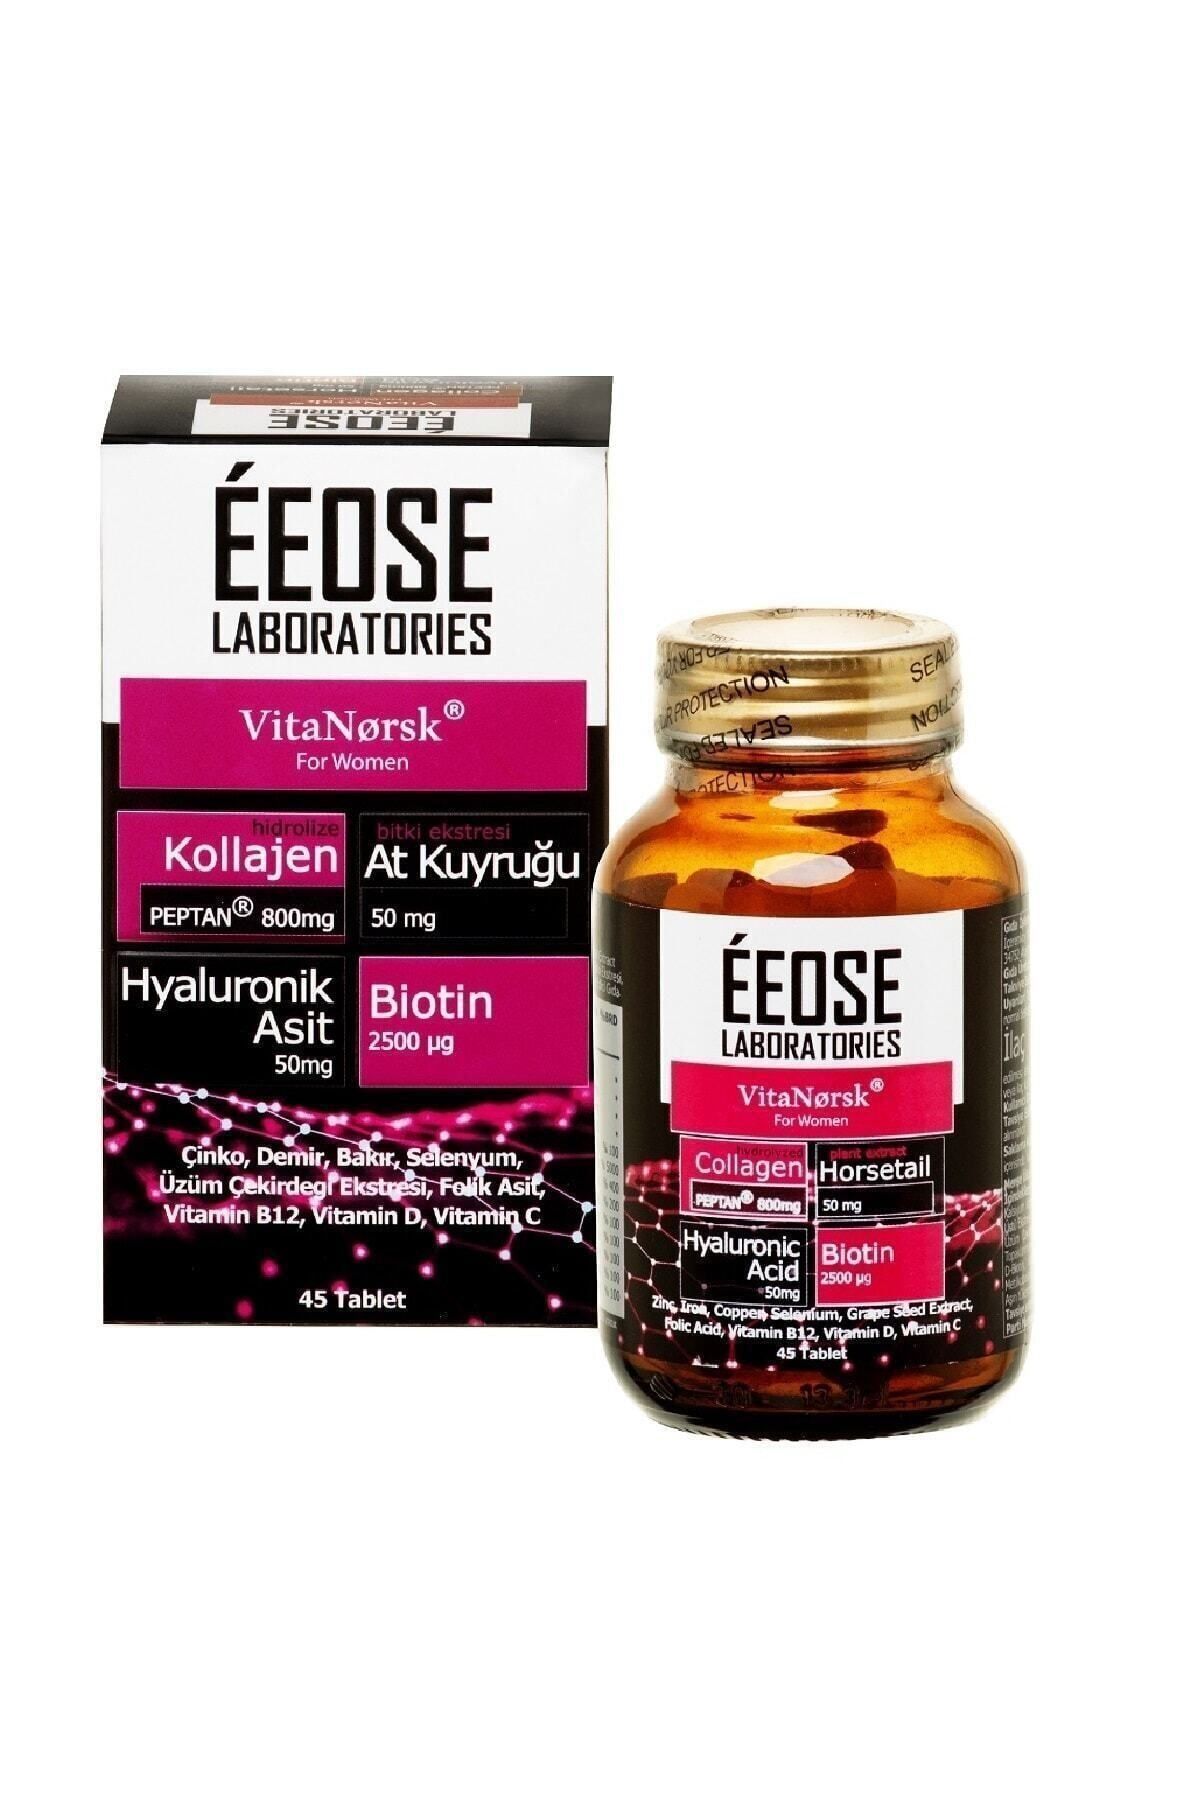 Eeose Collagen Tablet ( Kollajen + Hyaluronik Asit + Atkuyruğu + Haluronik Asit + Biotin) 45 Tablet